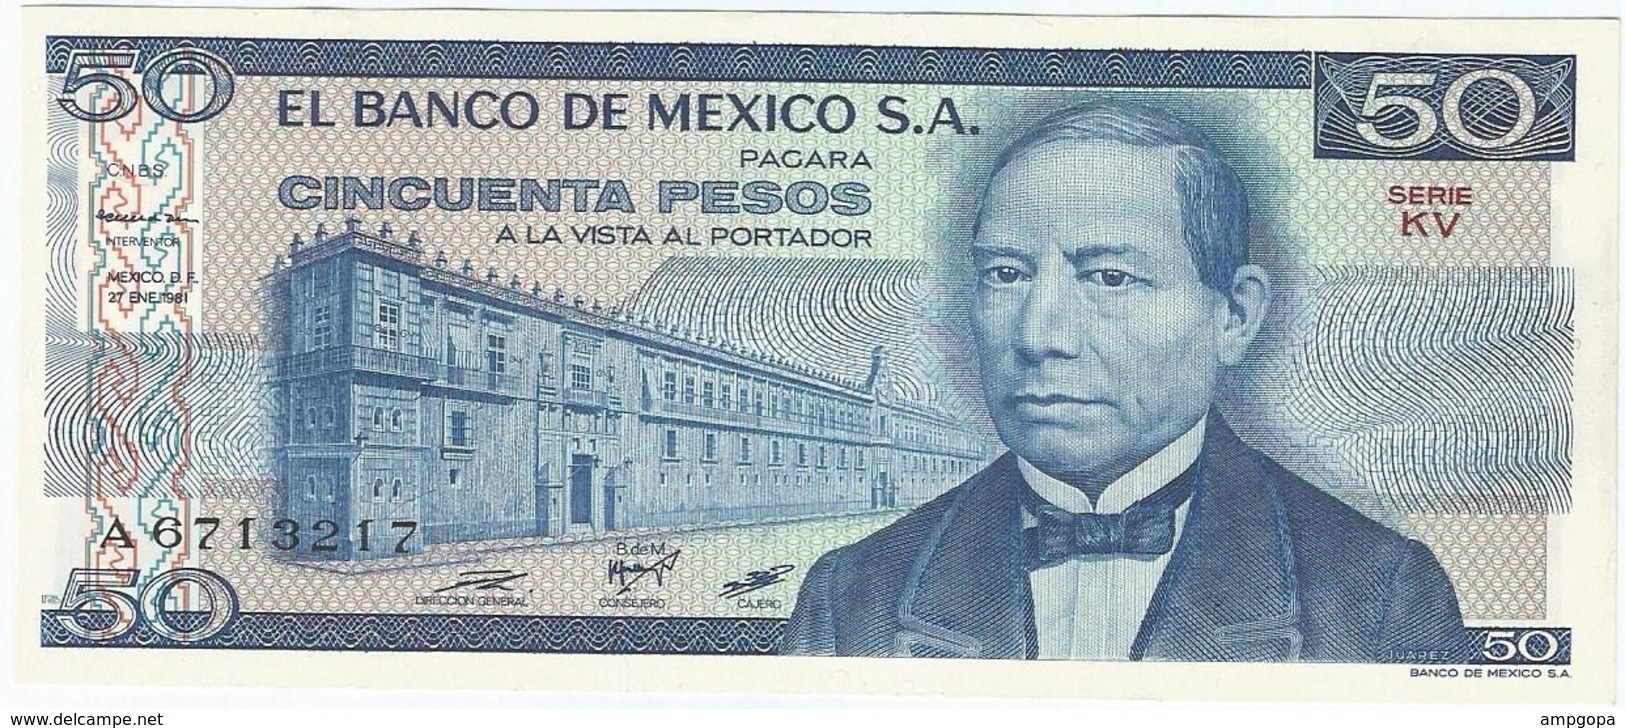 México 50 Pesos 27-1-1981 KU-KV Pick 73 UNC - Mexico